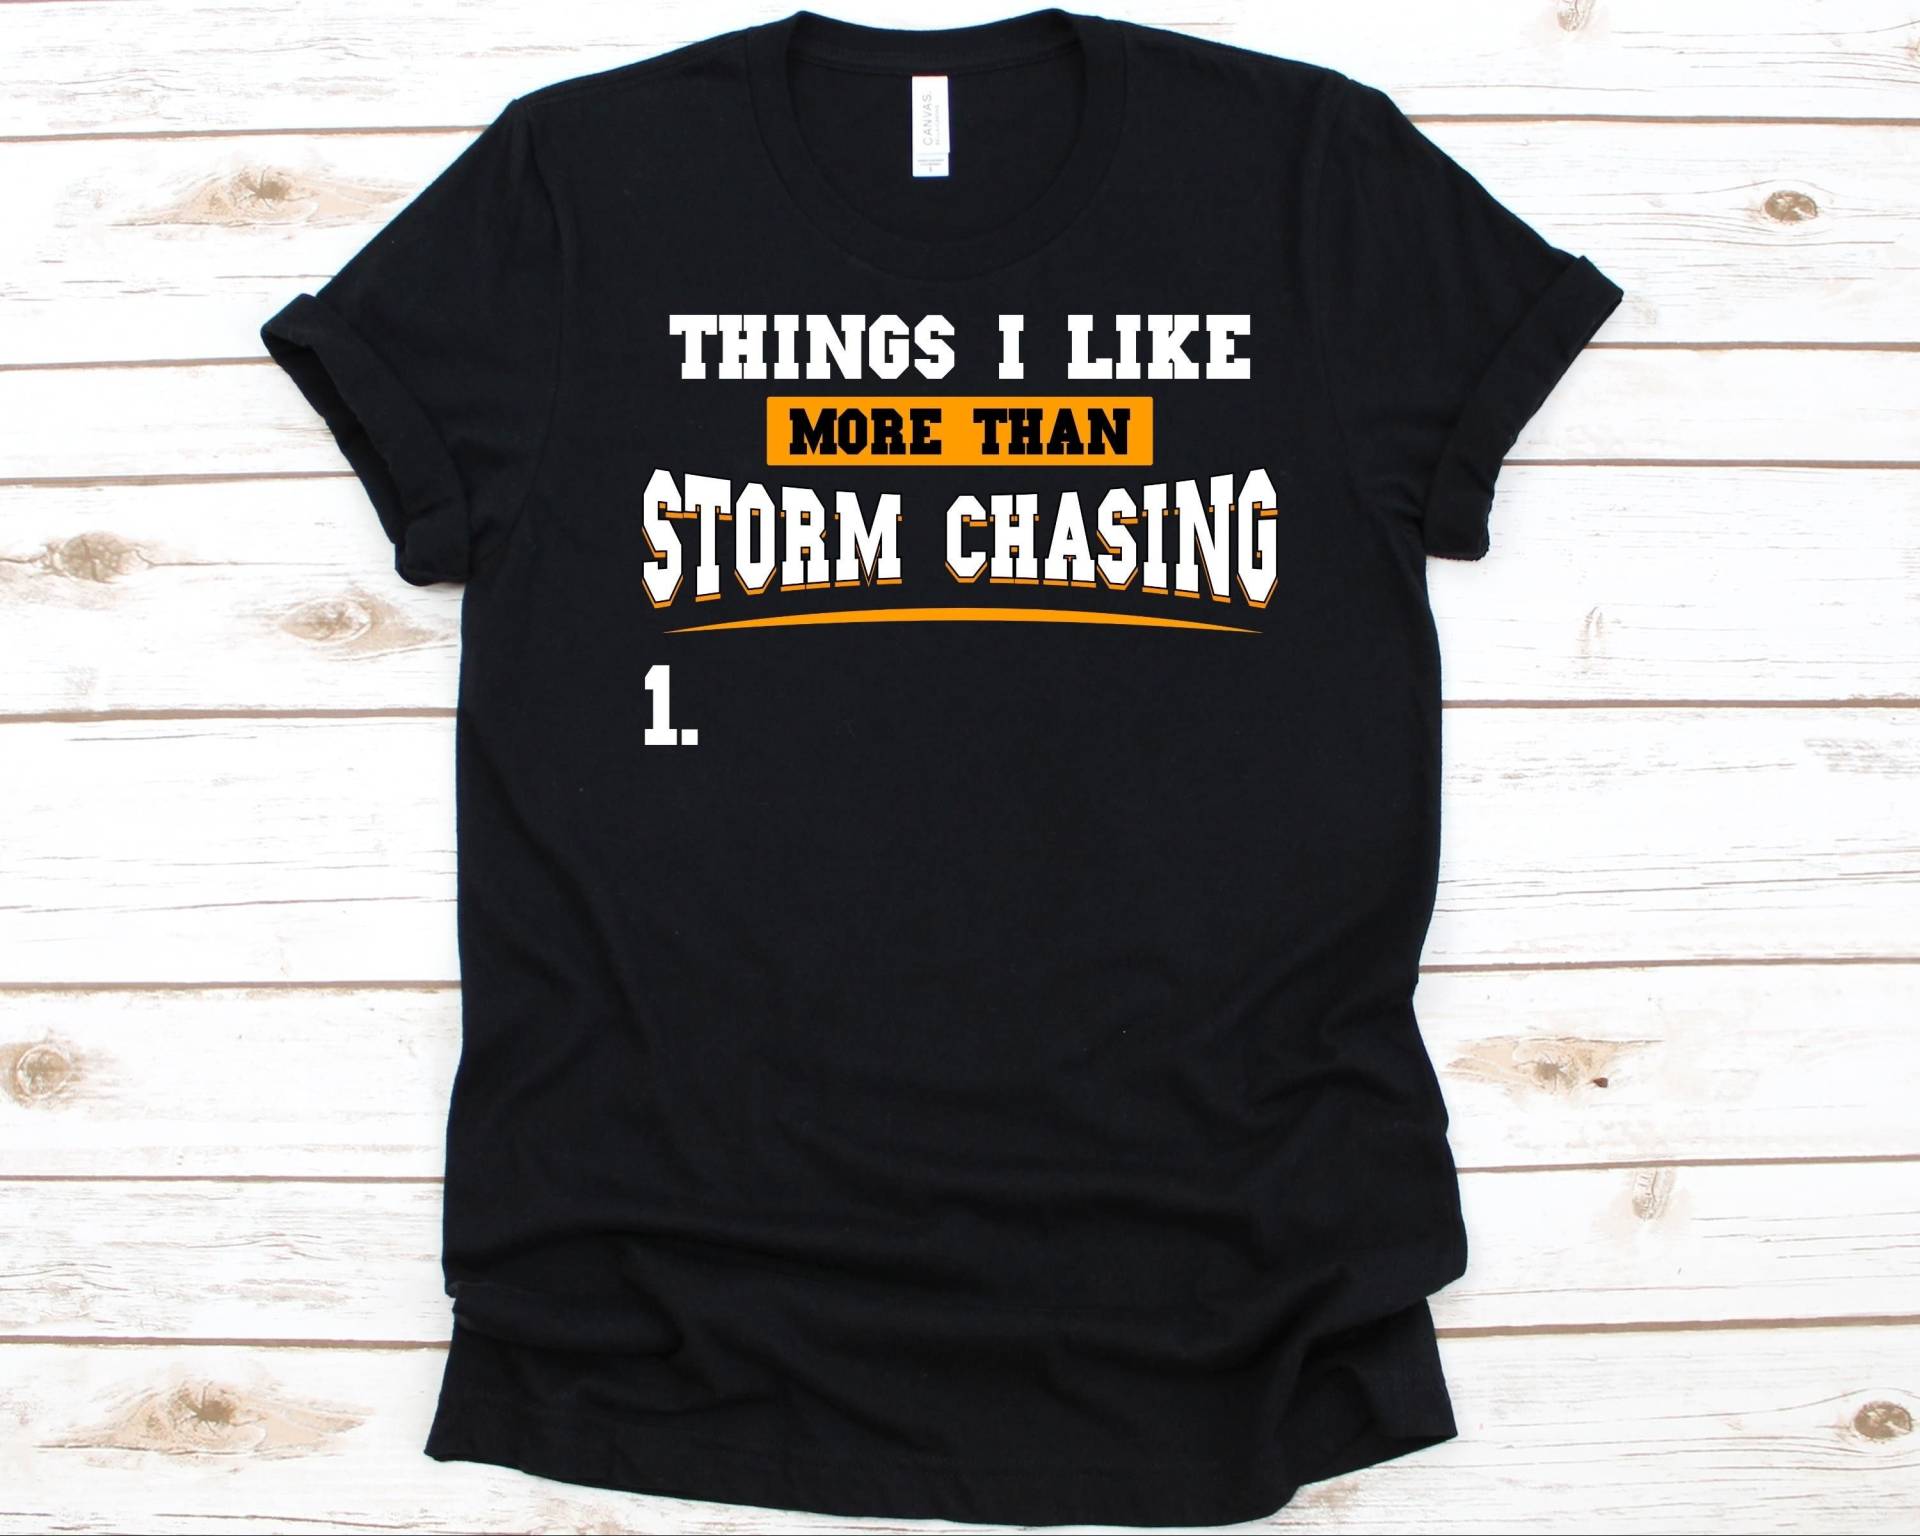 Things I Like More Than Storm Chasing 1. Shirt, Geschenk Für Sturmjäger, Tornado Chaser, Chasing, Tornado, Stormy Days von AbbysDesignFactory